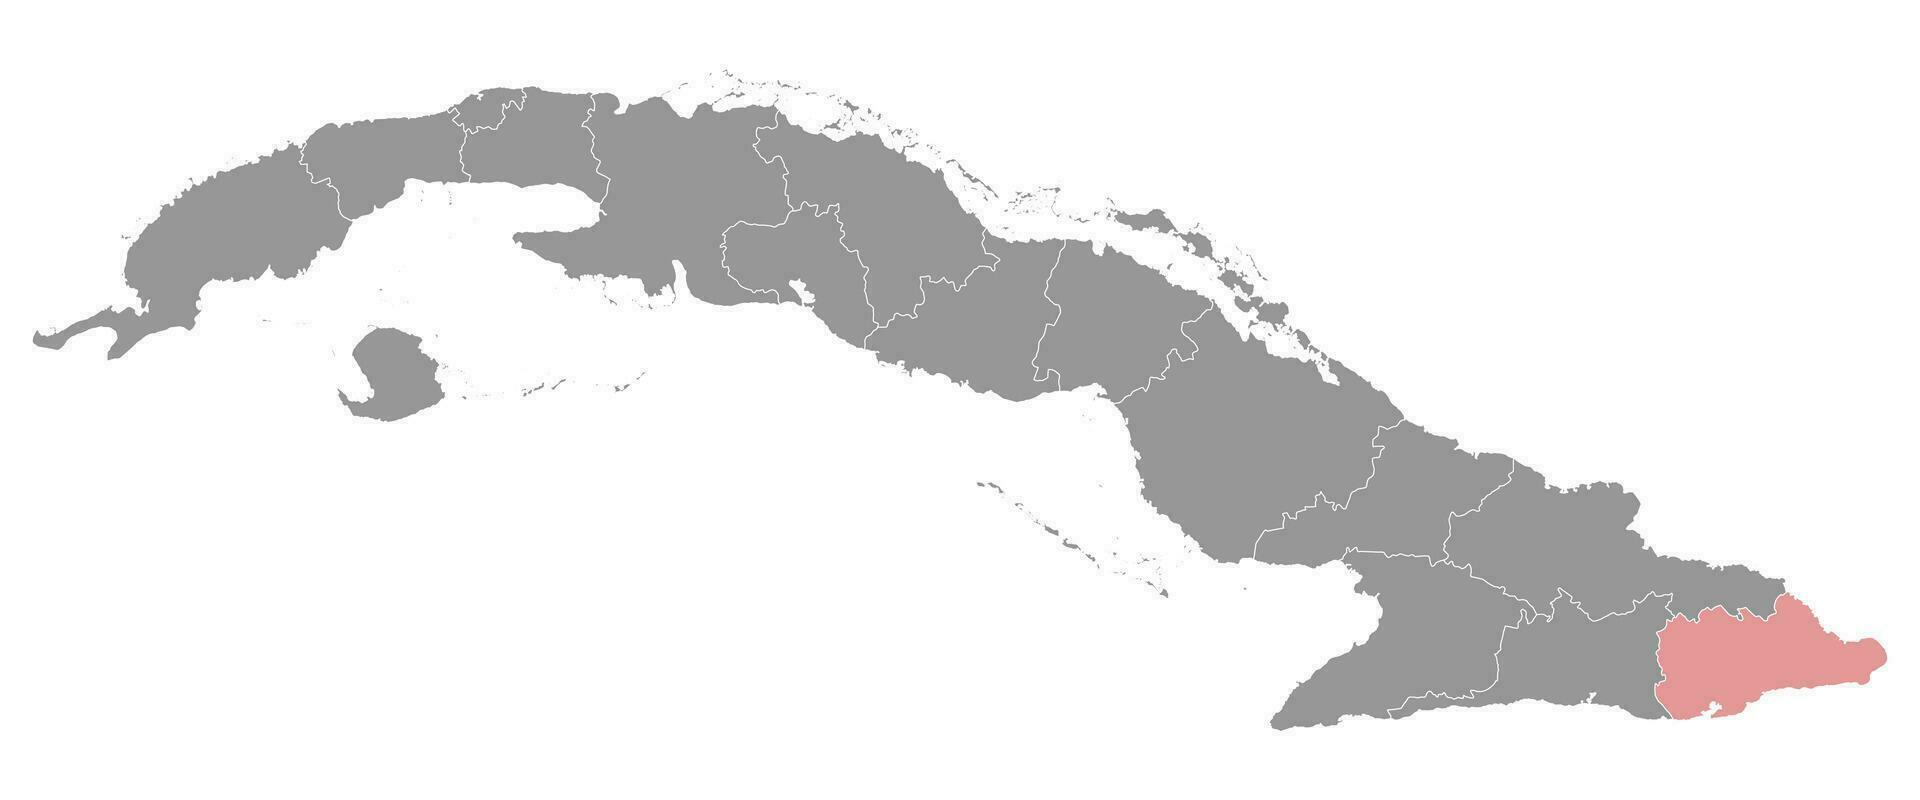 Guantánamo provincia mapa, administrativo división de Cuba. vector ilustración.